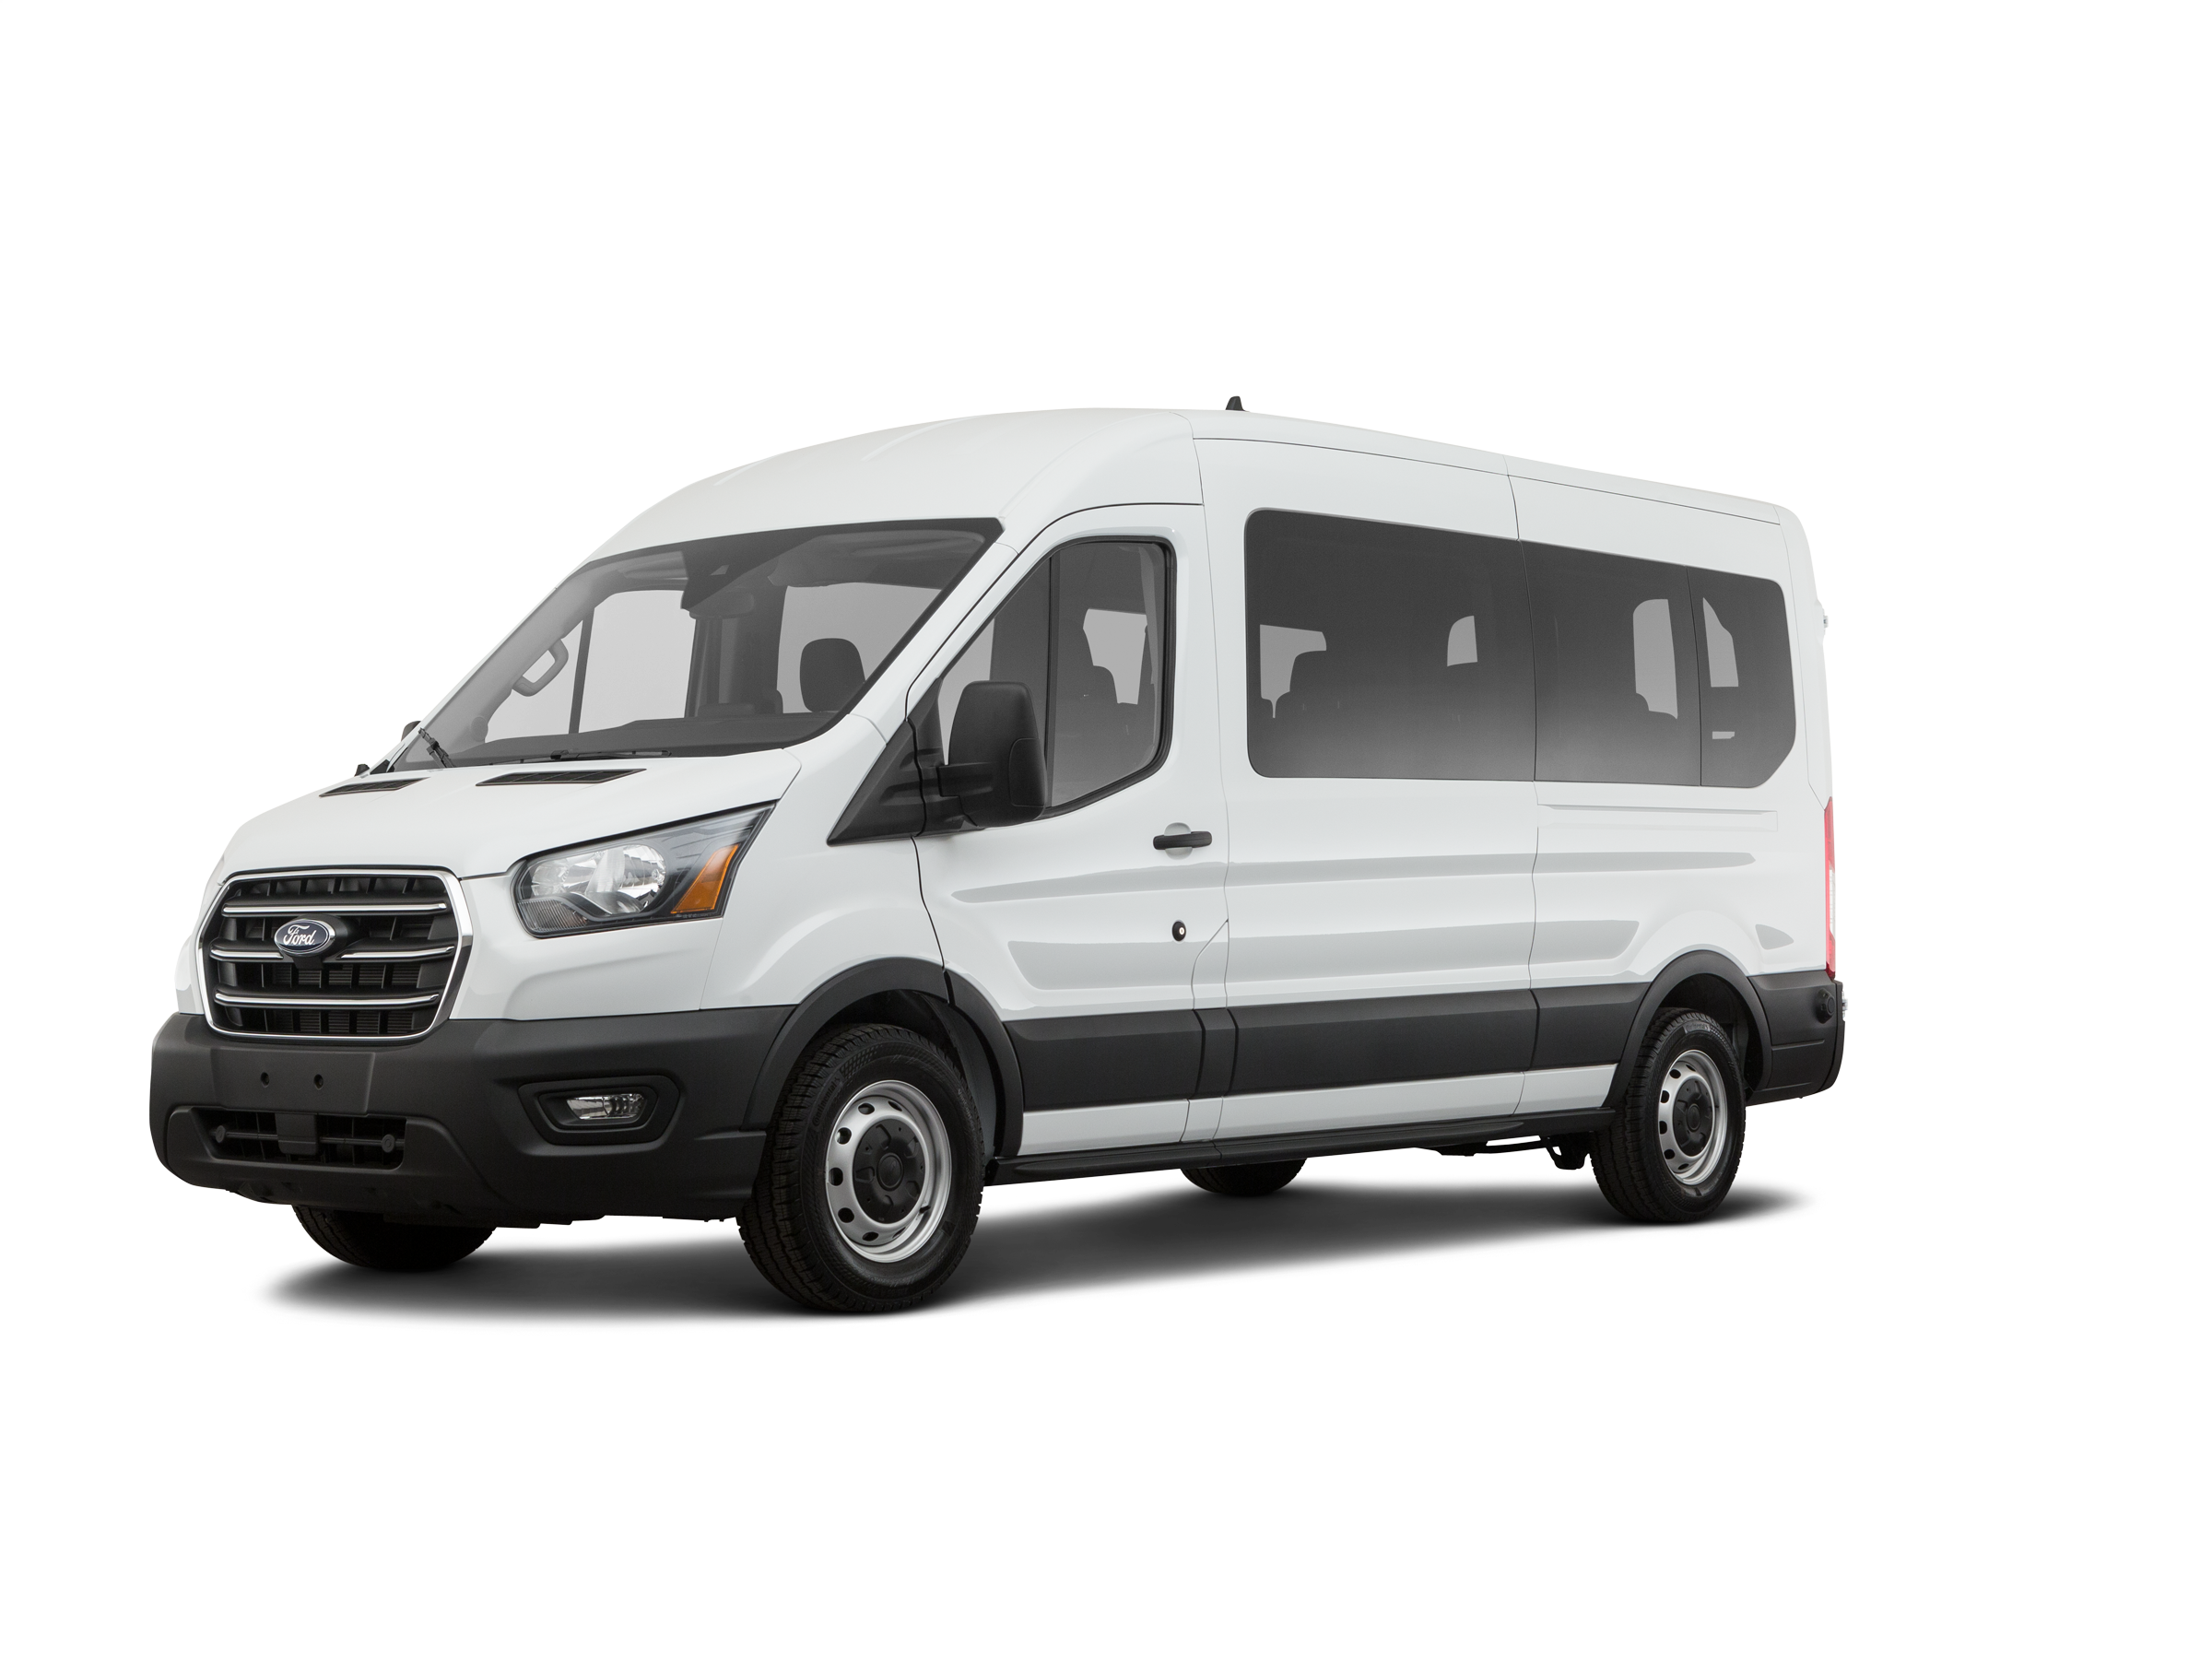 2020 Ford Transit 350 Passenger Van Price, Value, Ratings & Reviews